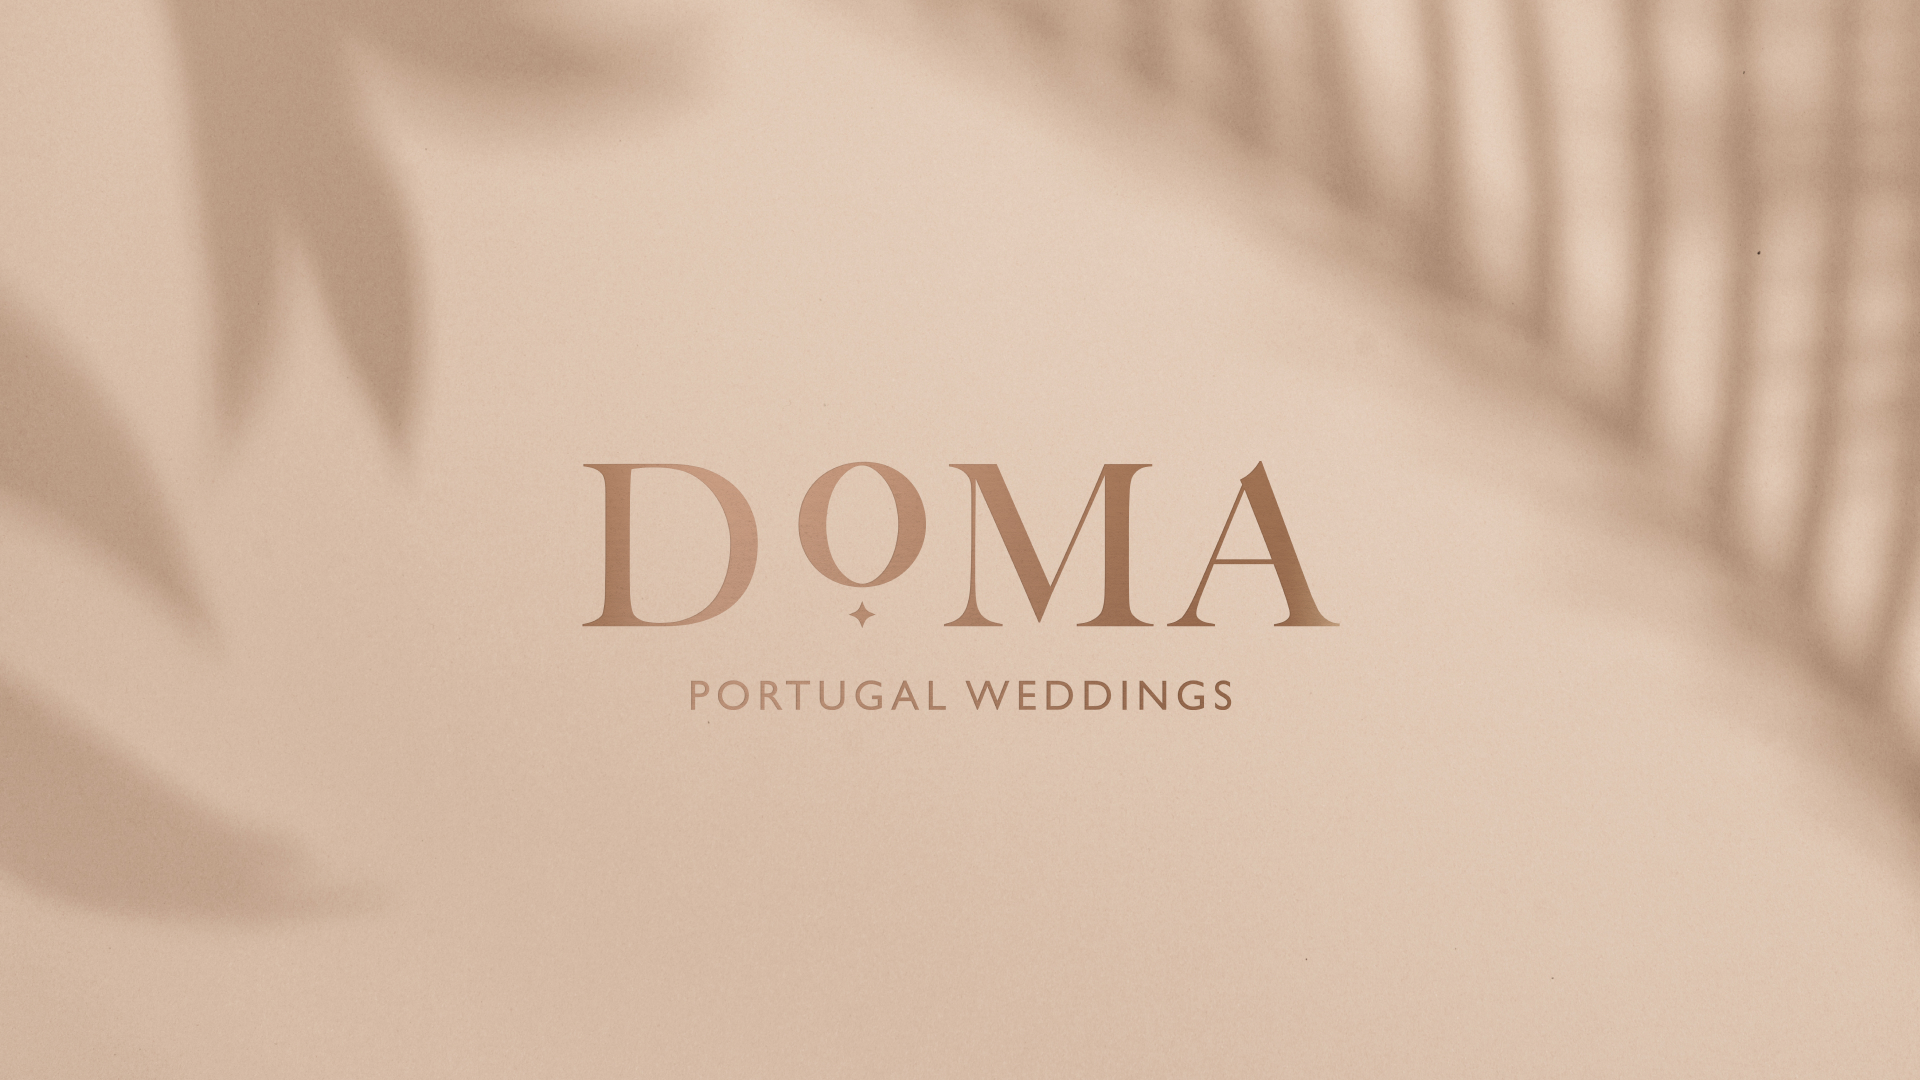 DOMA Portugal Weddings